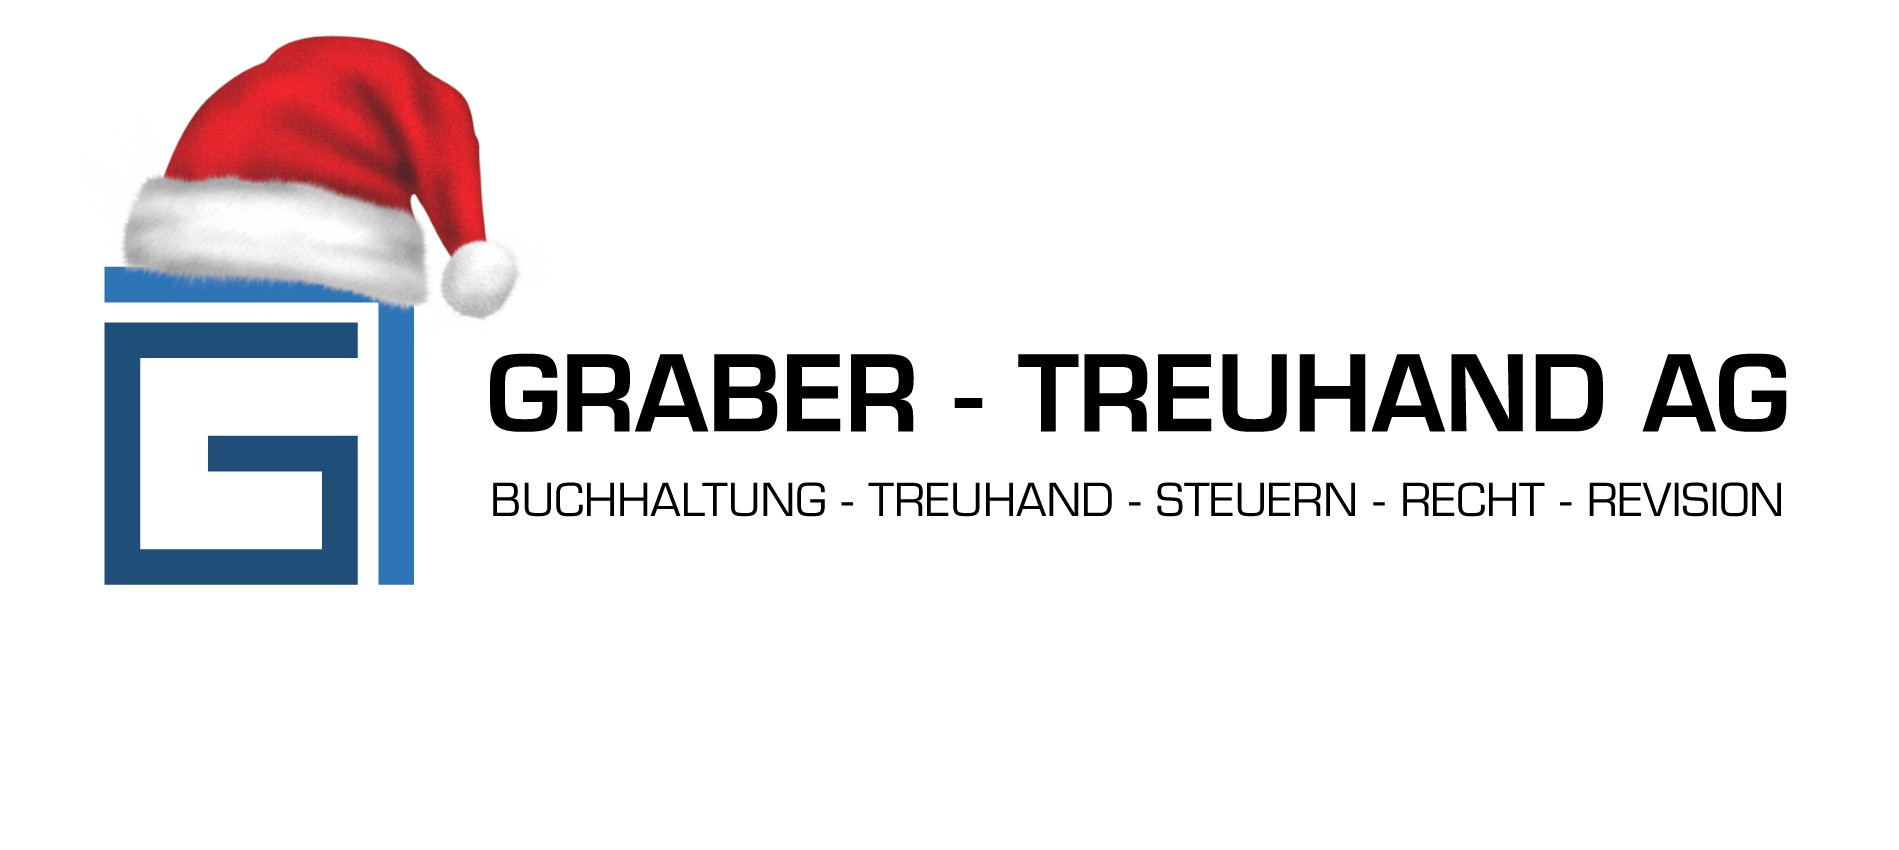 GRABER-TREUHAND AG    